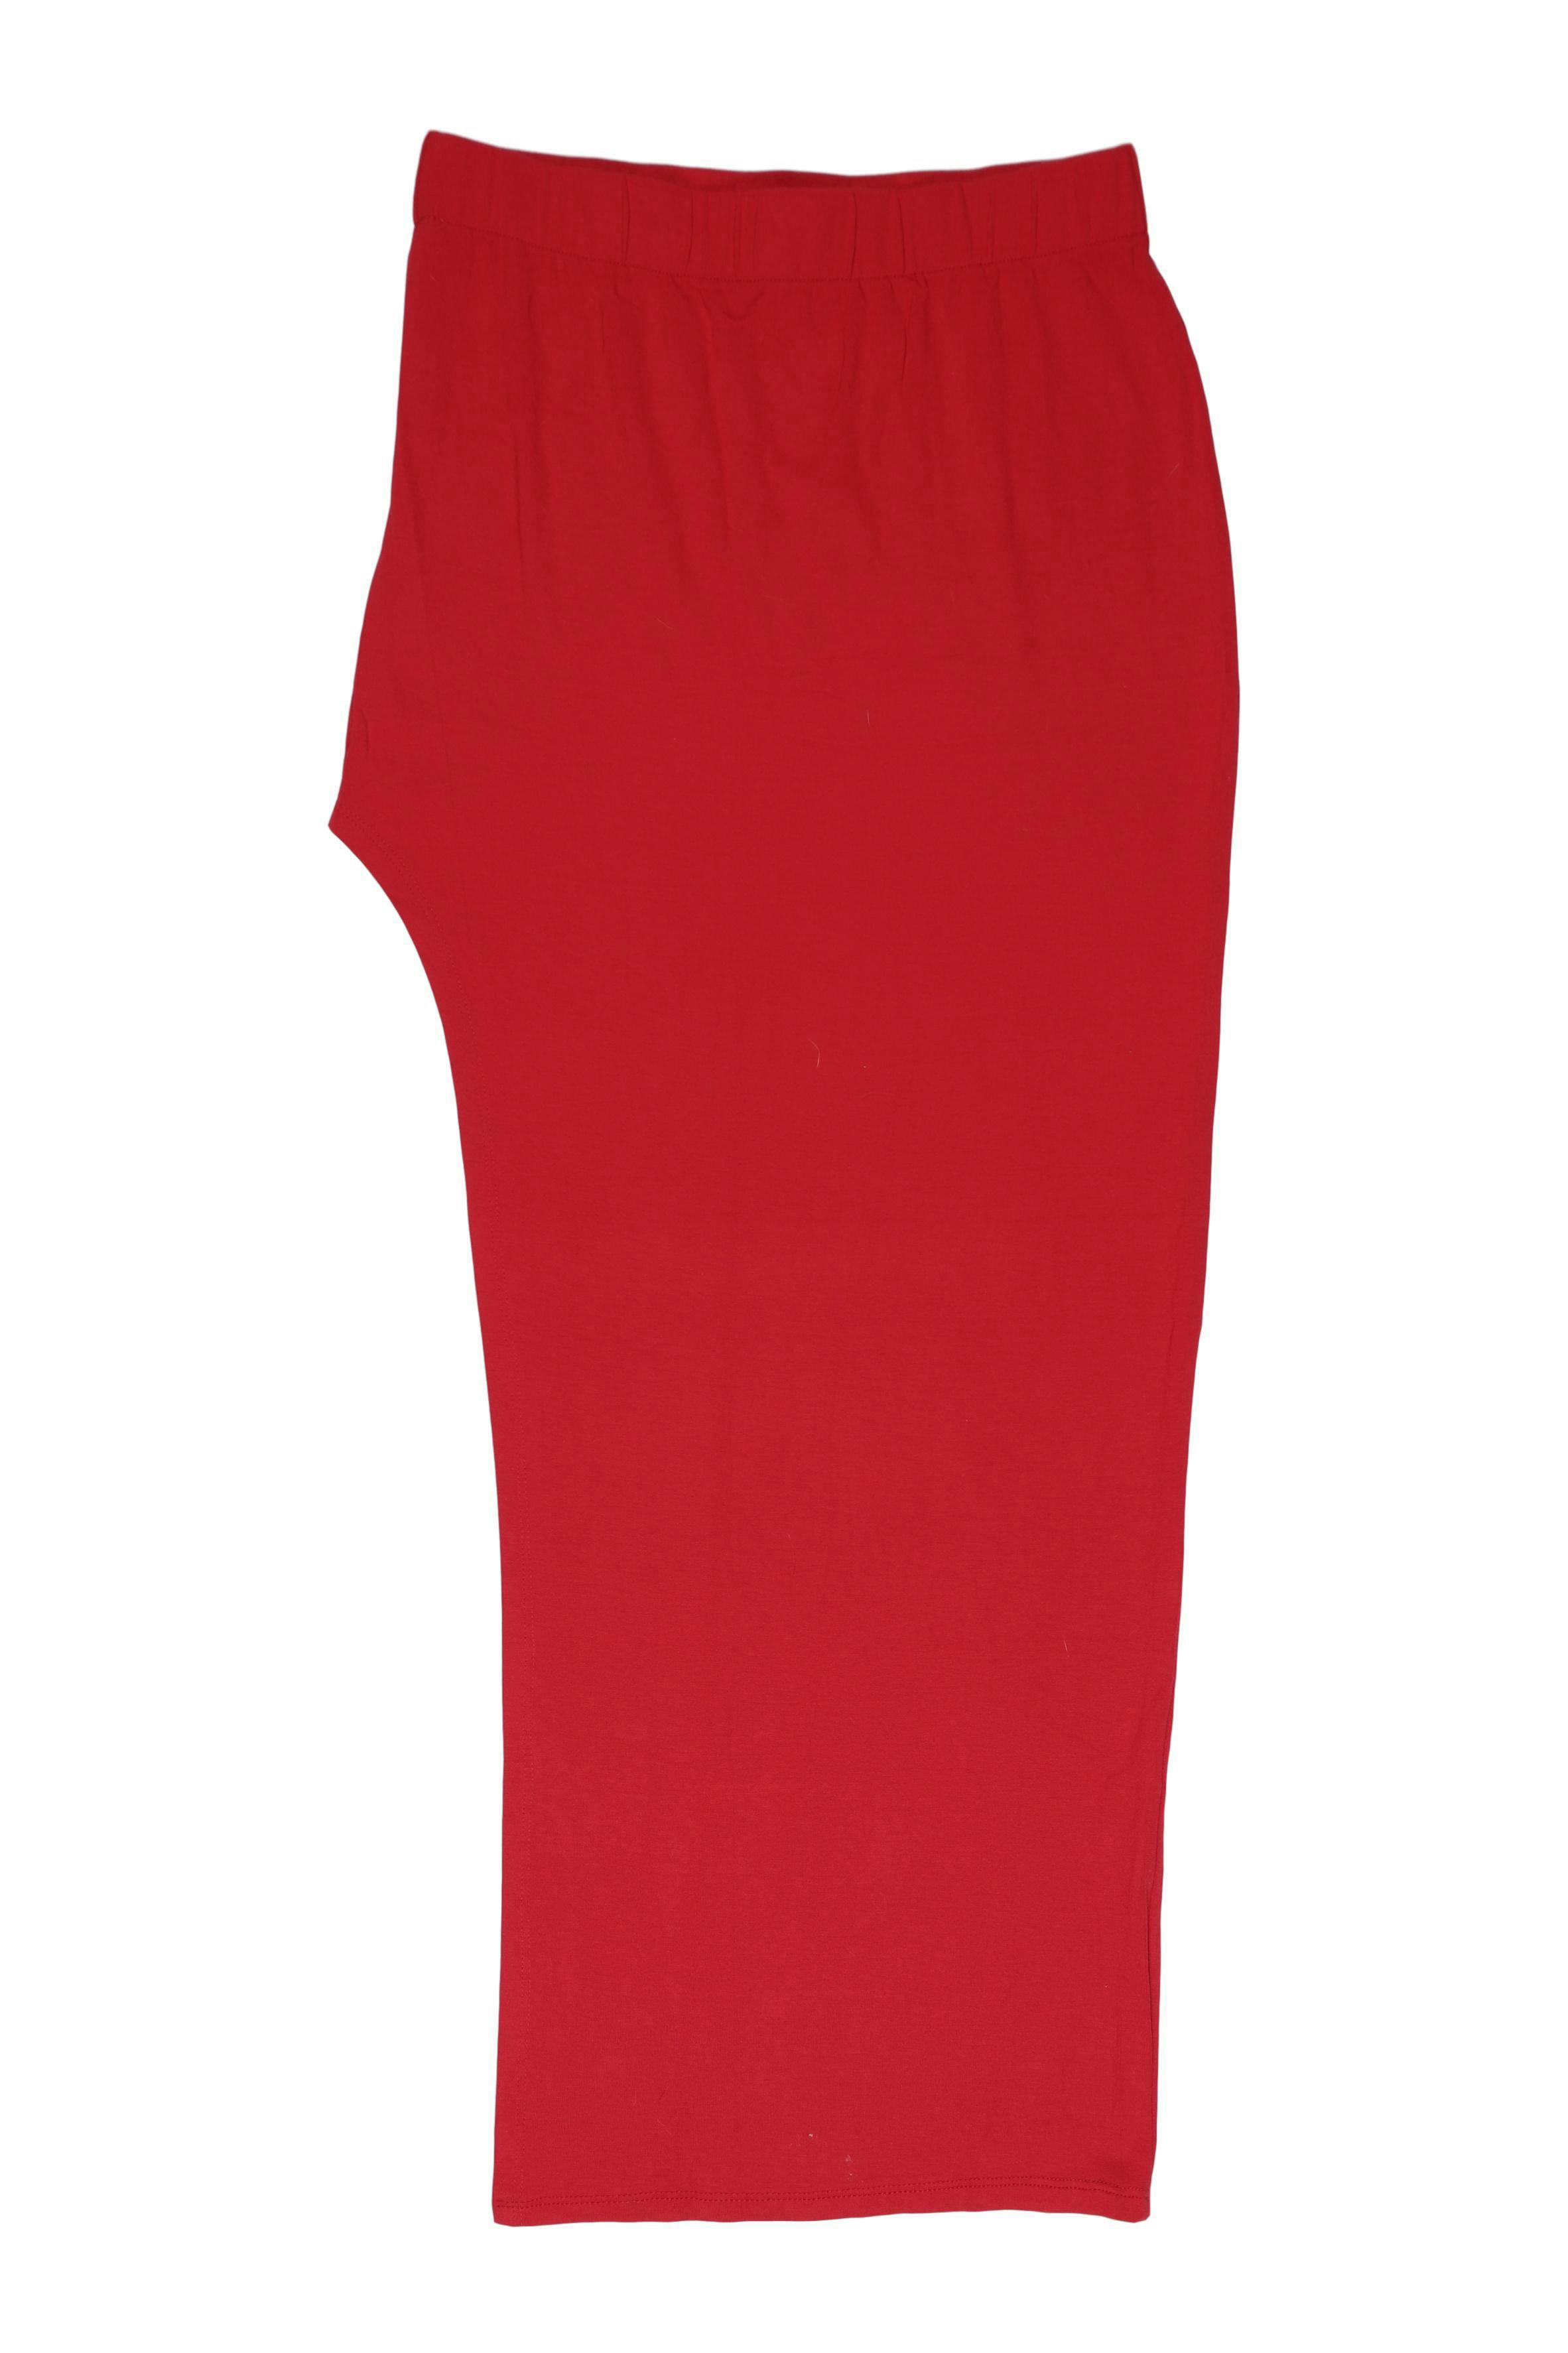 Falda larga roja tipo algodón stretch, asimétrica con abertura lateral